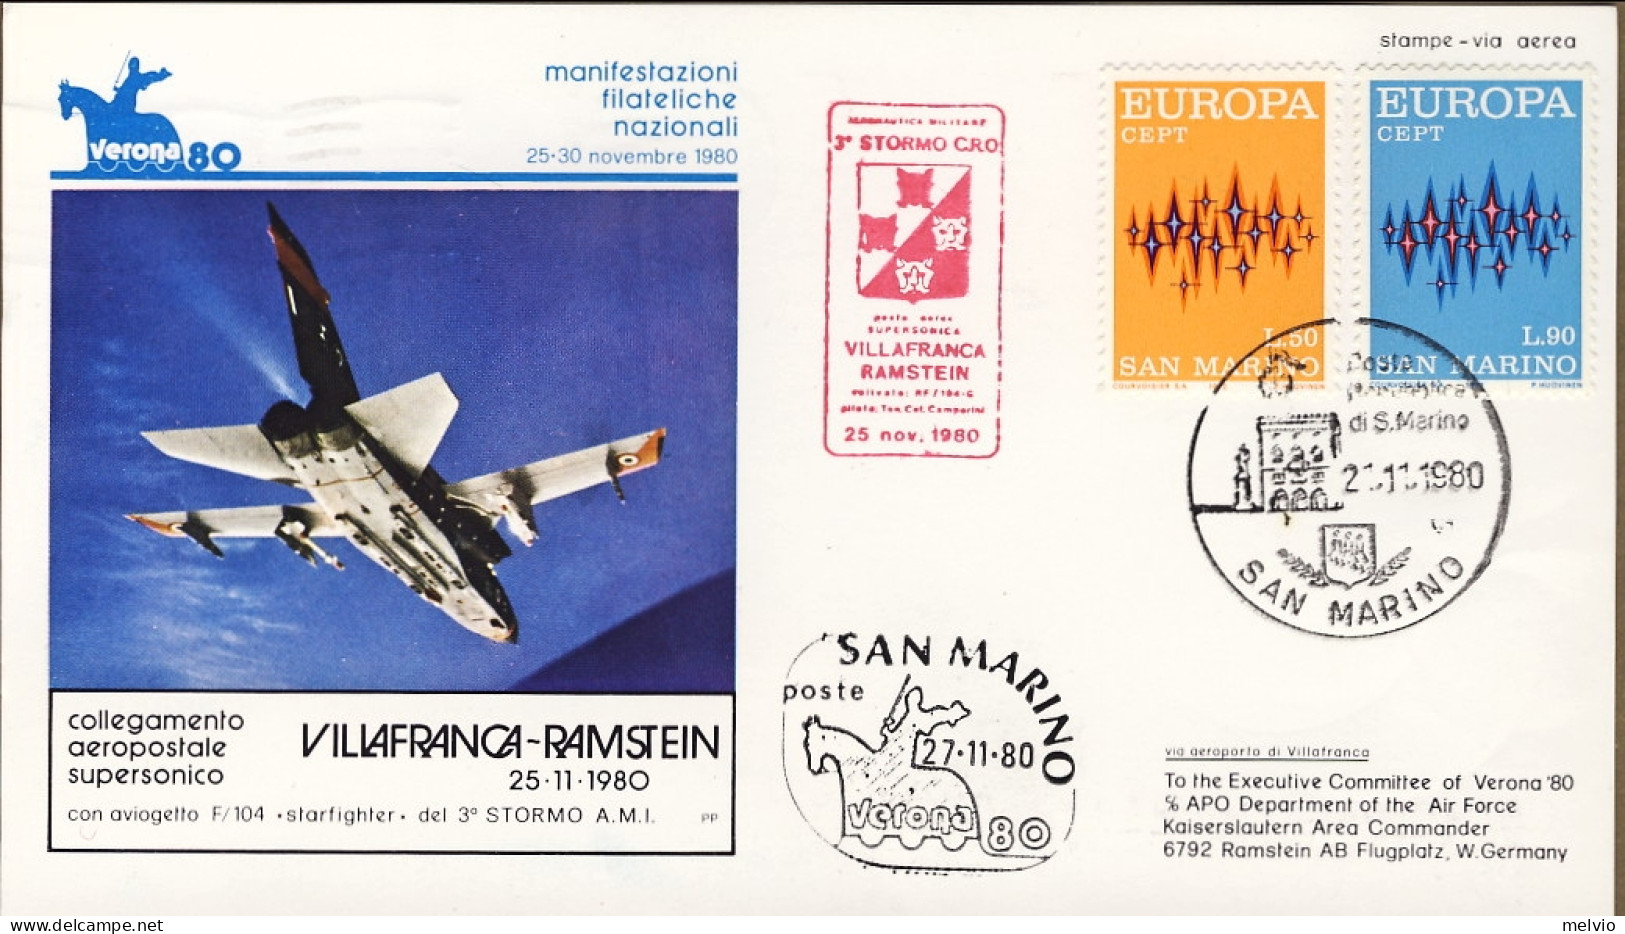 San Marino-1980 Cartolina Illustrata Manifestazioni Filateliche Nazionali Verona - Airmail